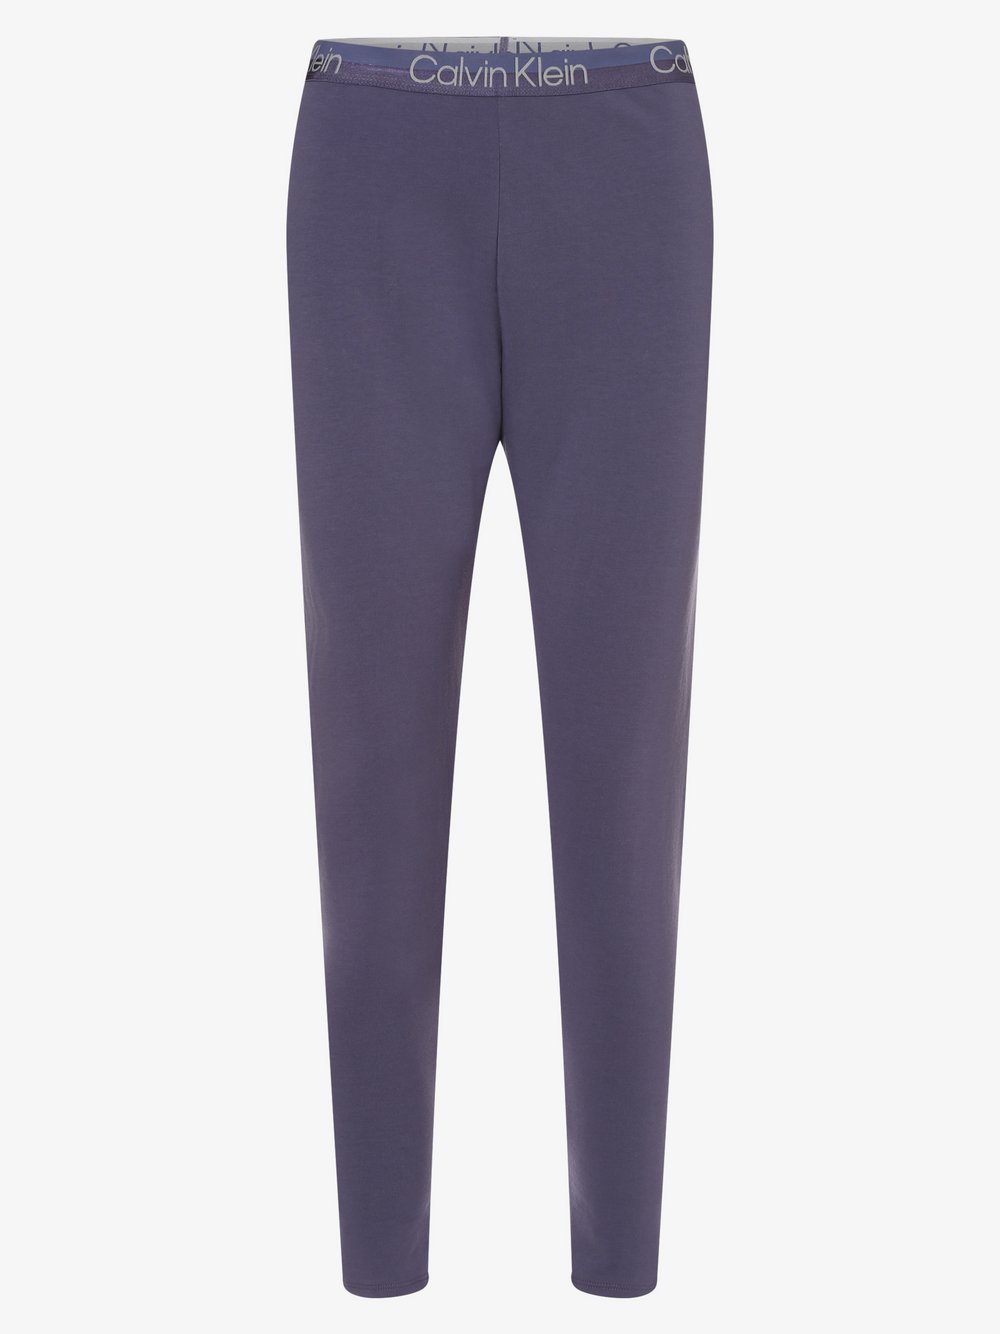 Calvin Klein - Damskie spodnie od piżamy, niebieski